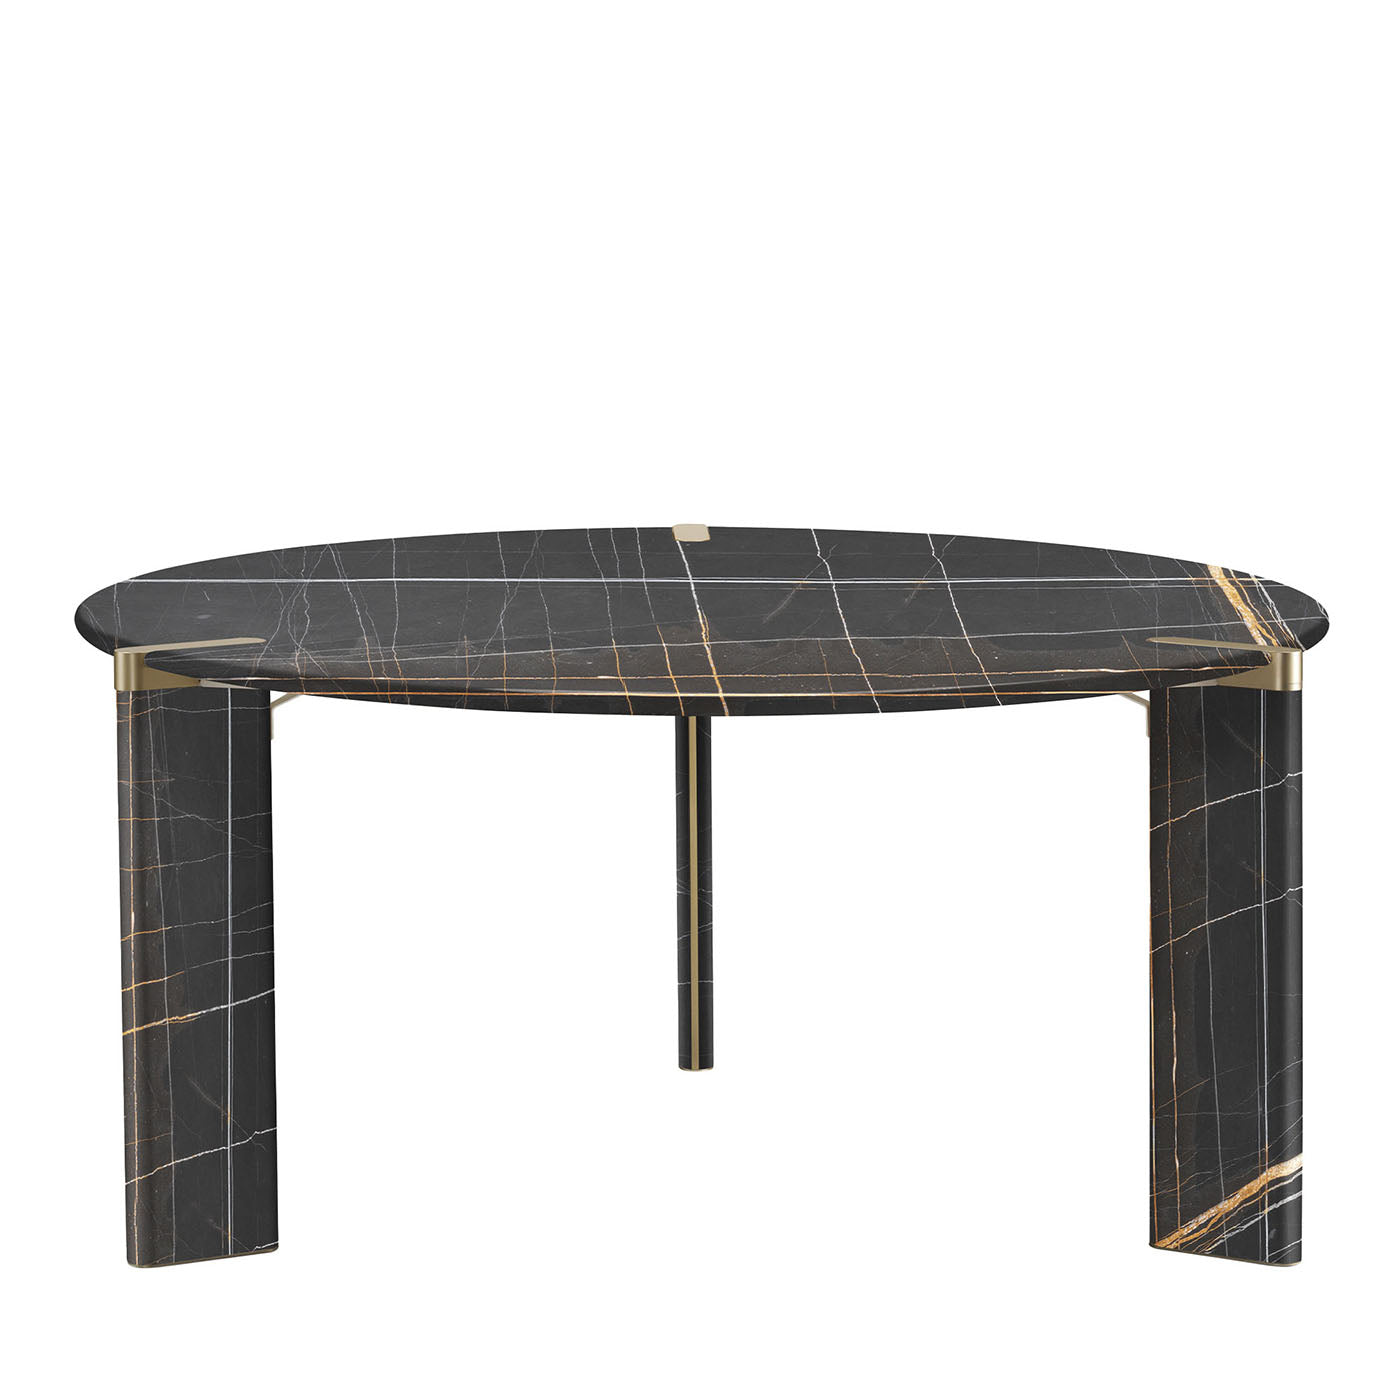 Ottanta Round Dark Dining Table by Lorenza Bozzoli - Main view